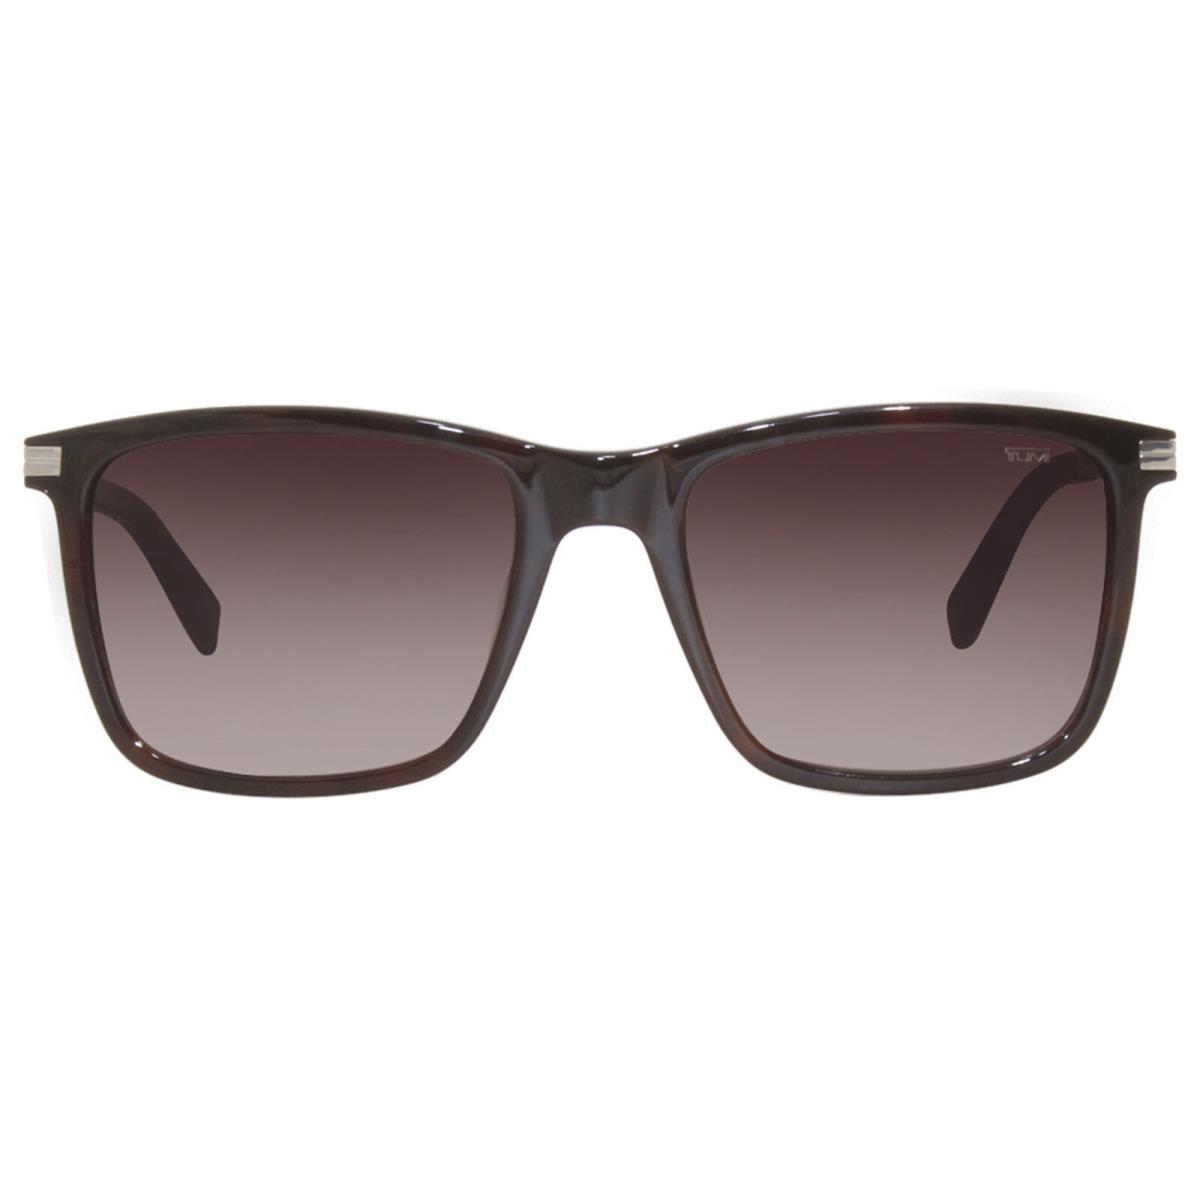 Tumi STU006 0722 Sunglasses Men`s Havana/brown Gradient CR39 Lenses Square Shape